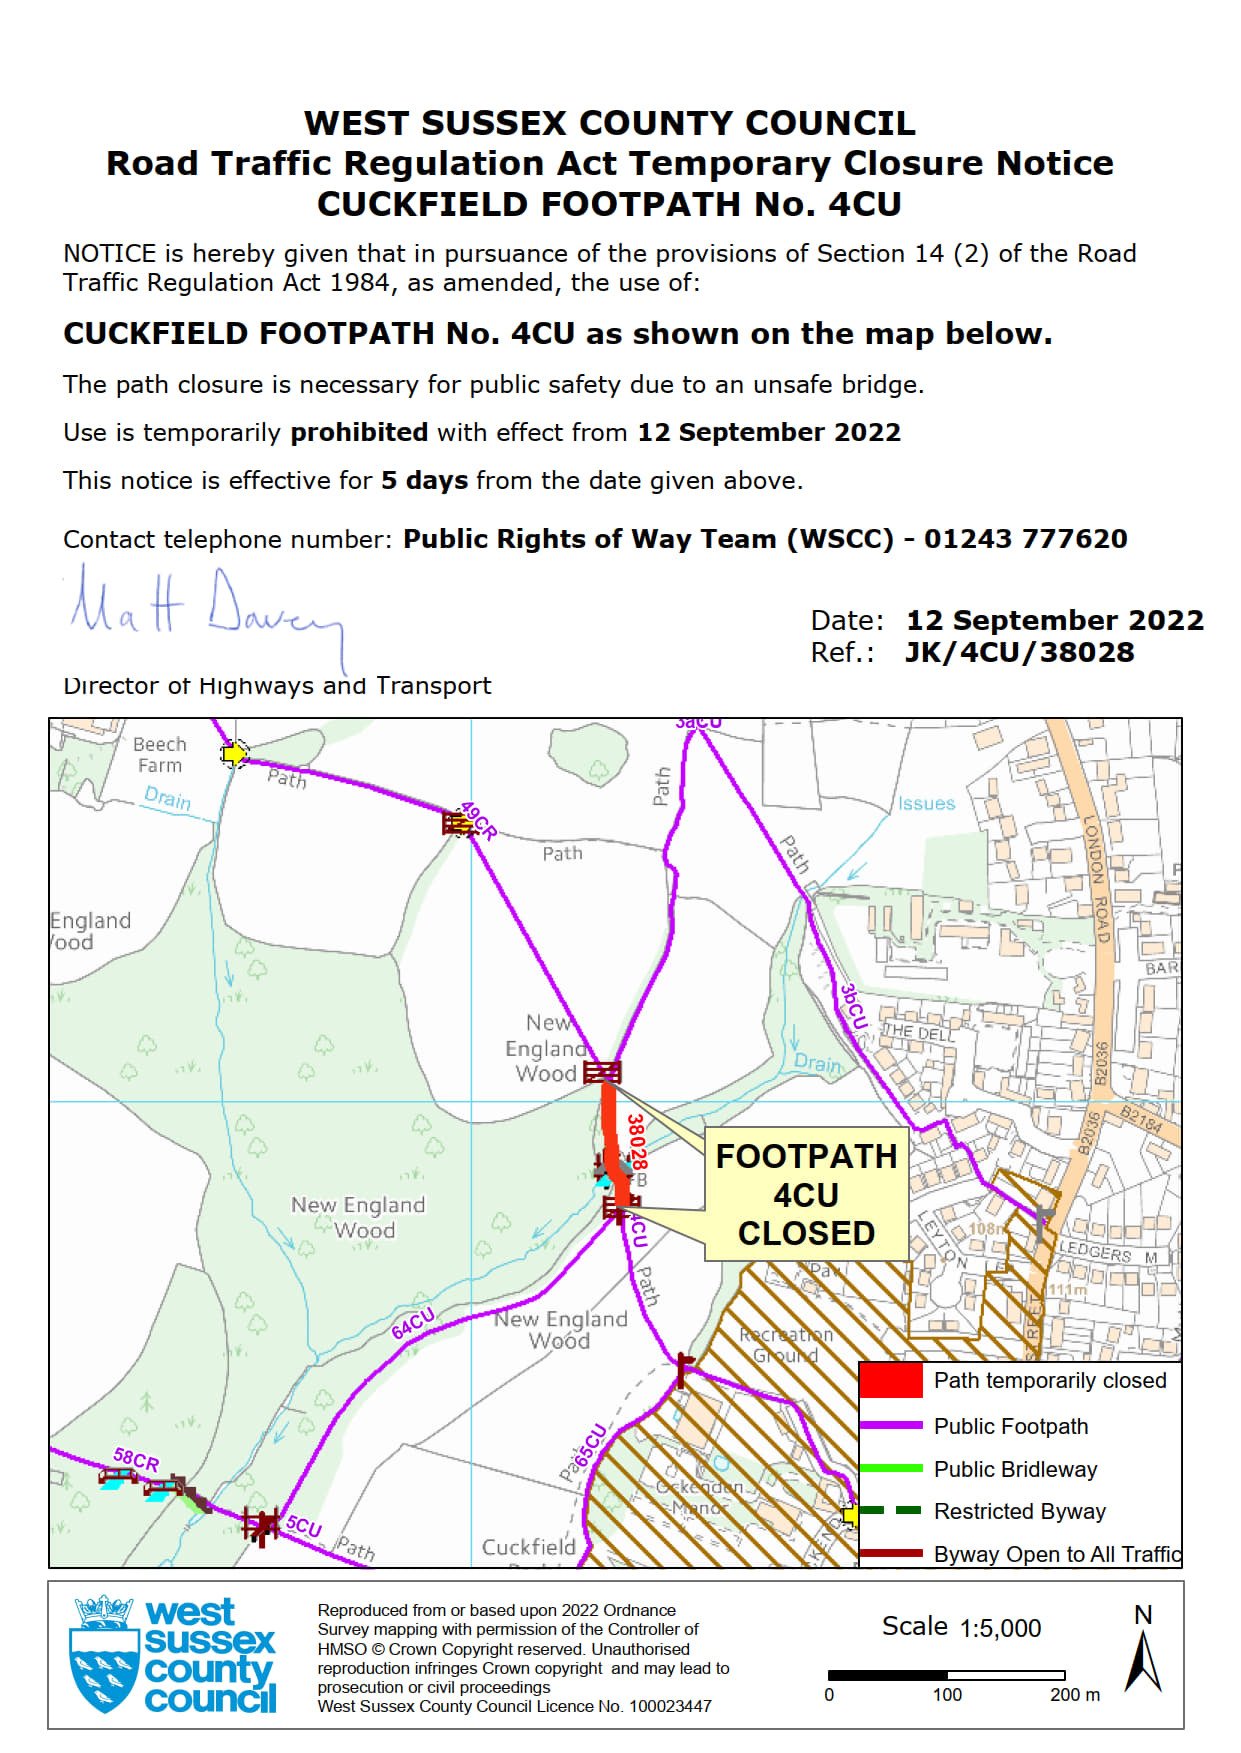 Cuckfield Footpath Closed